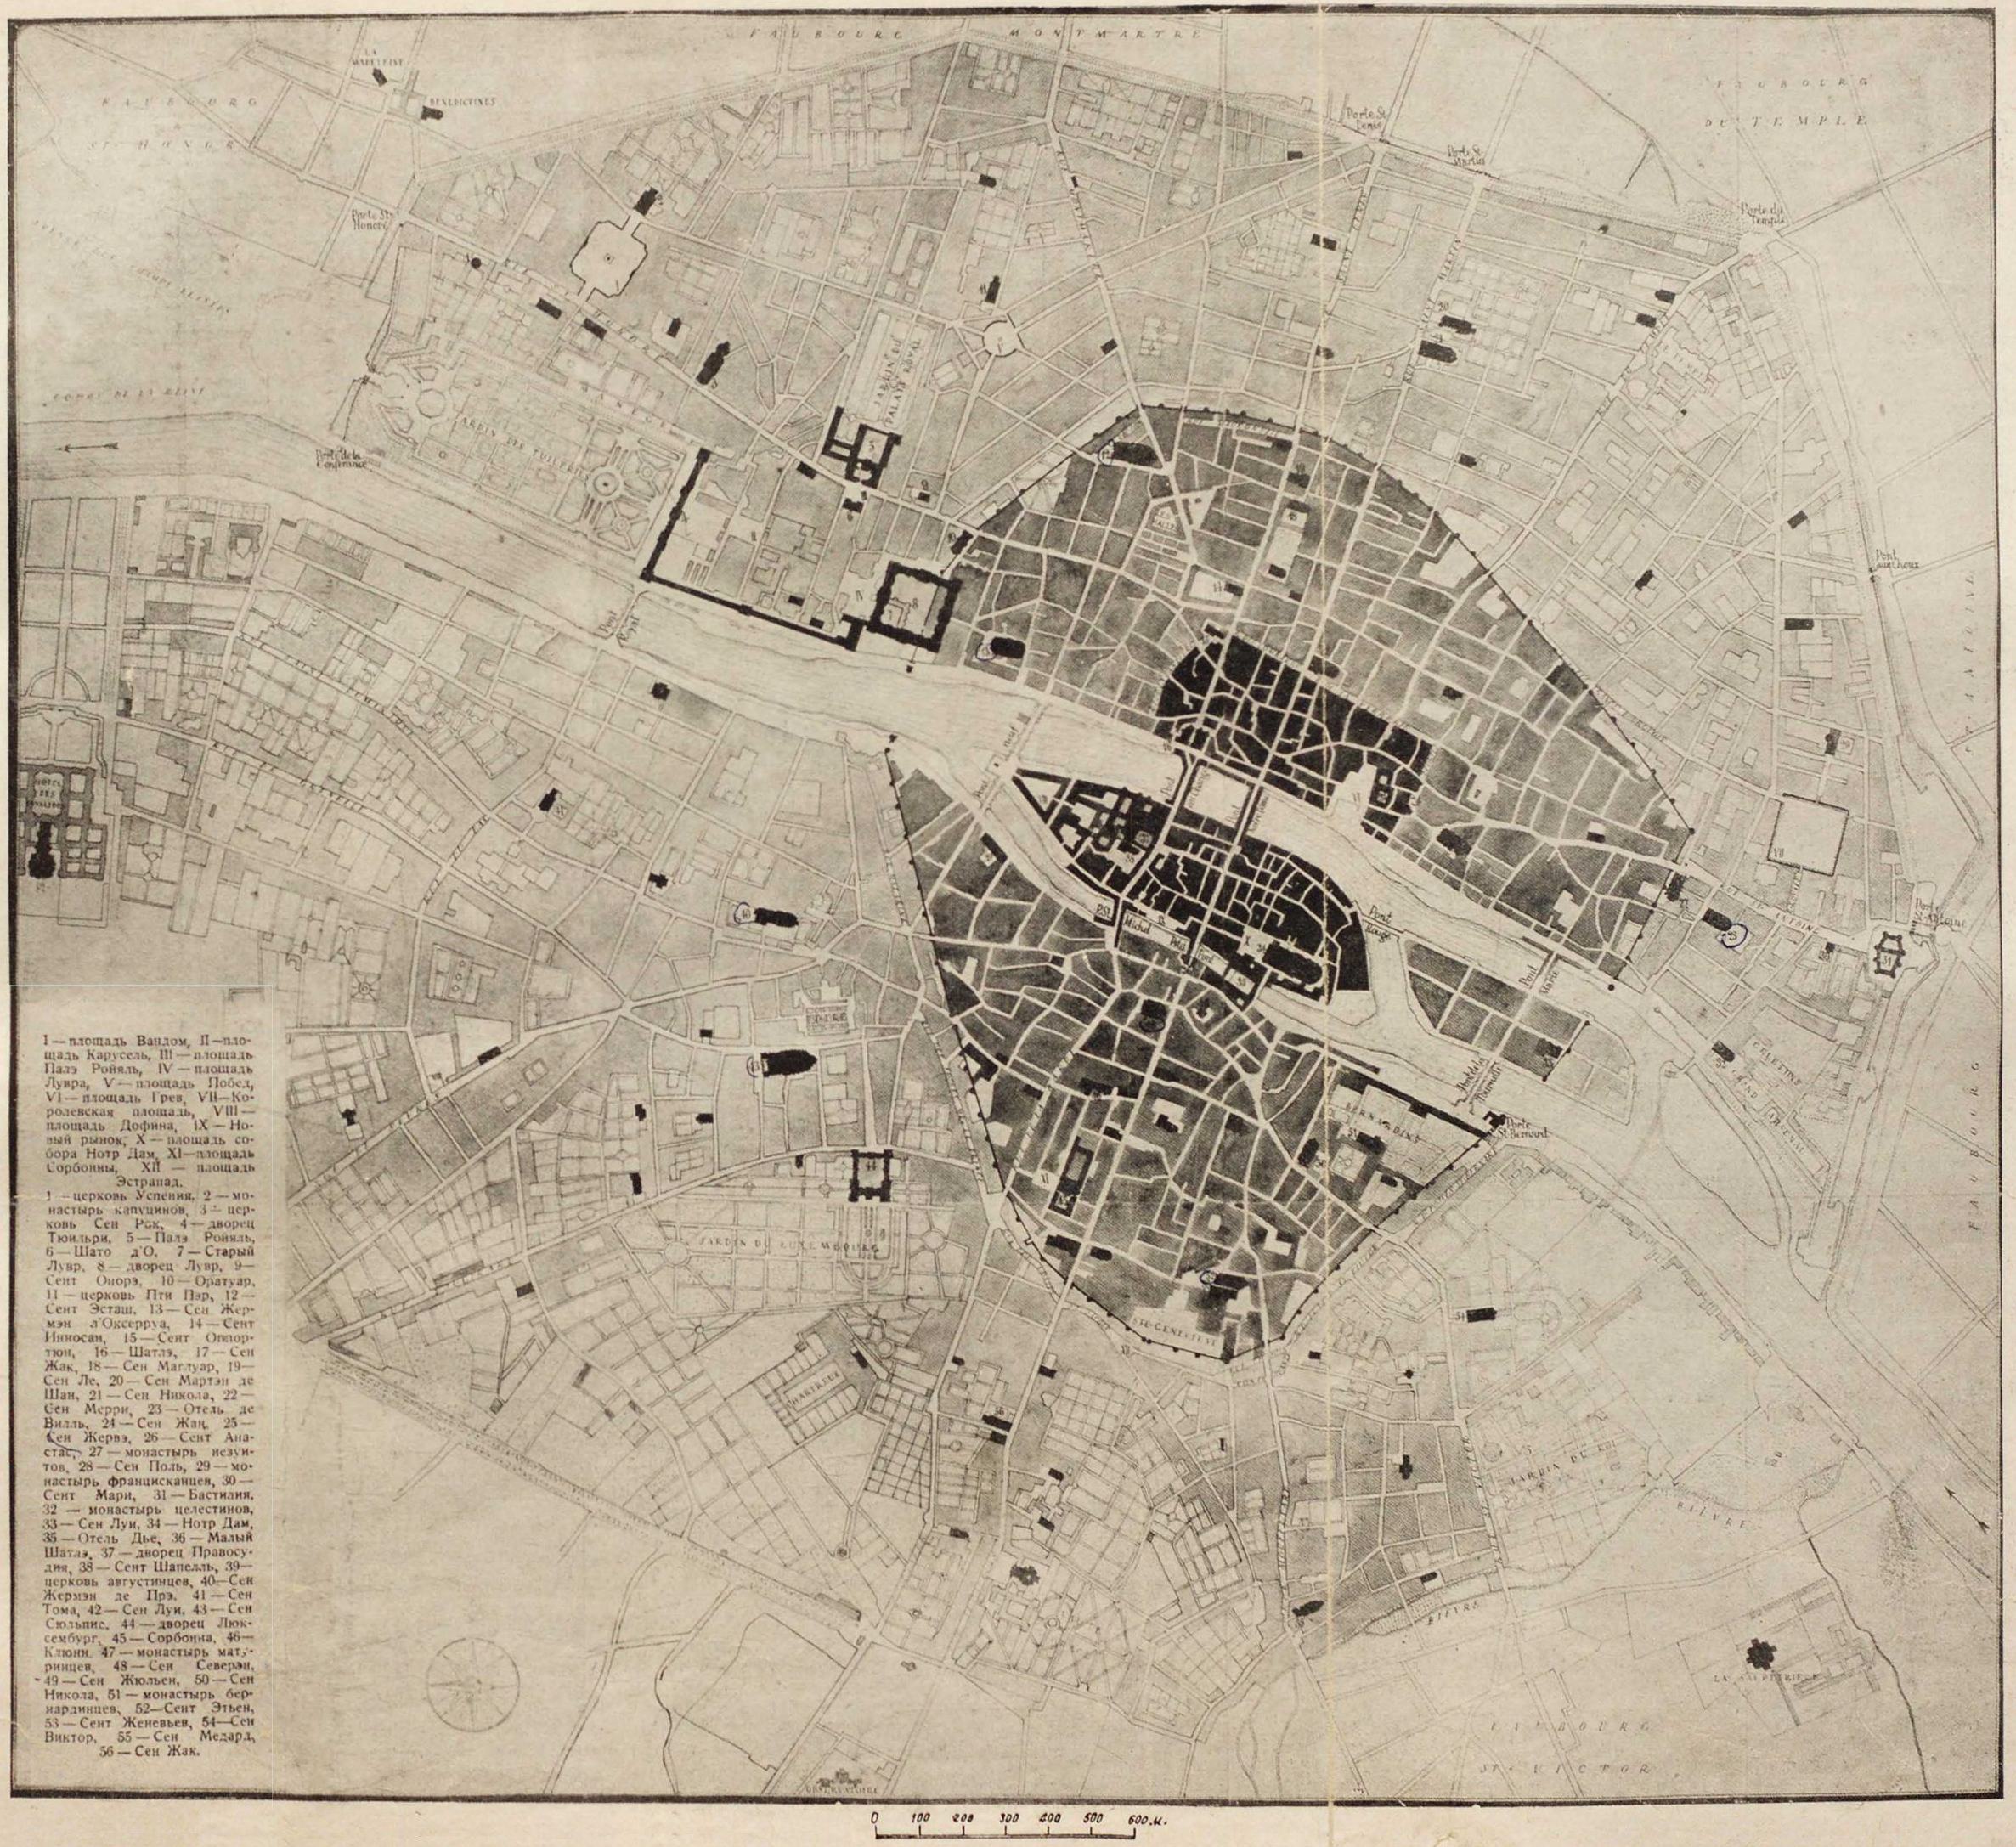 Схематический план развития города Парижа в XIII—XVIII веках. Paris au XIII—XVIII siècles